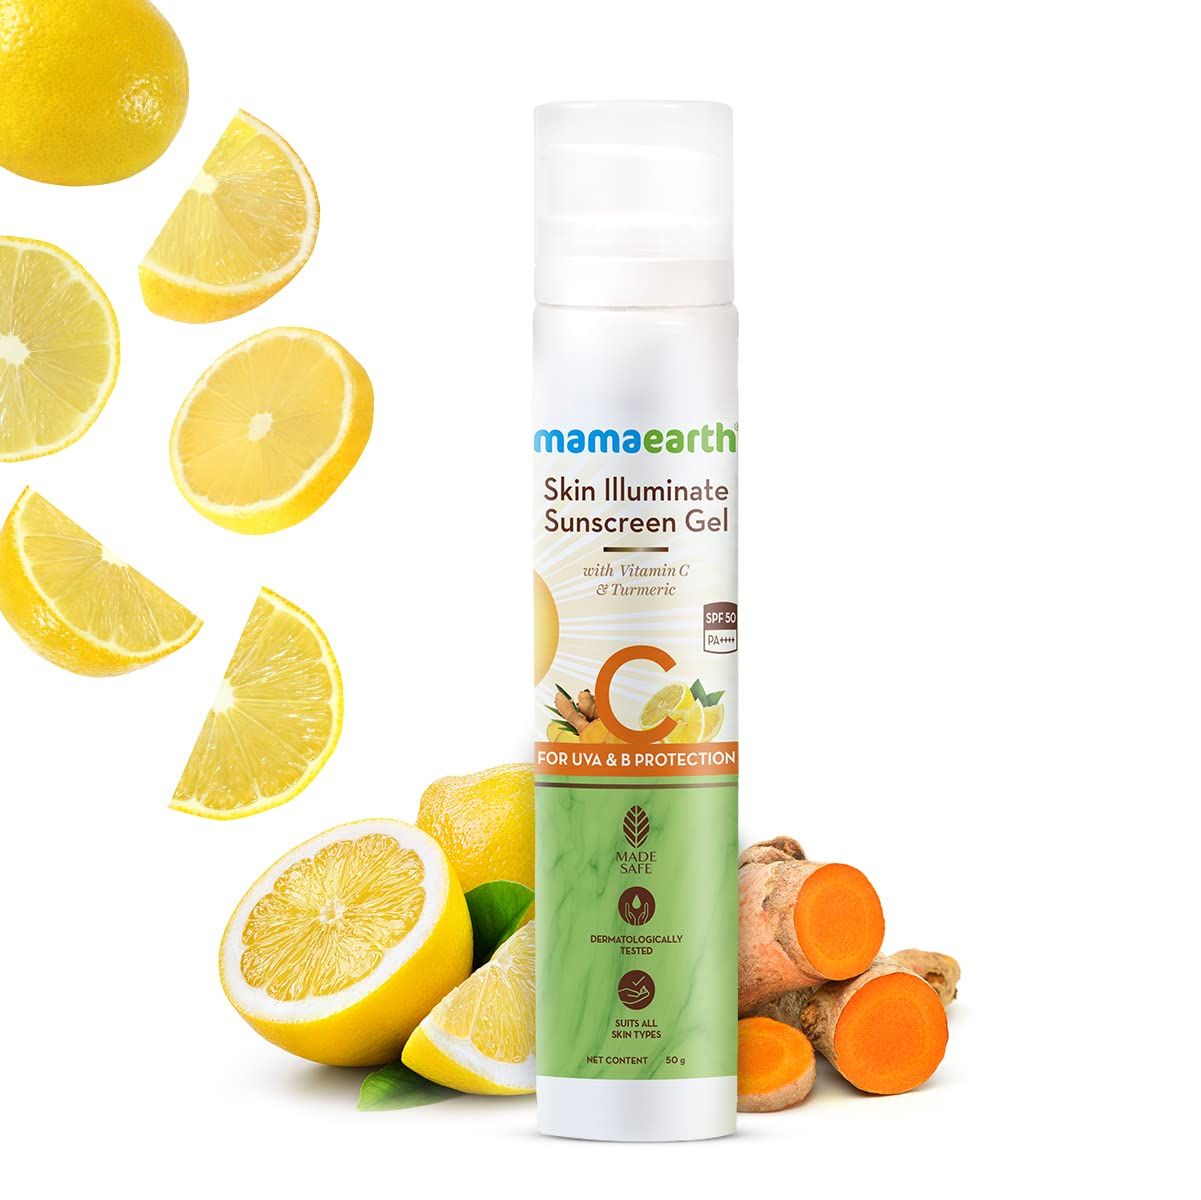 Skin Illuminate Sunscreen Gel SPF 50 with Vitamin C & Turmeric for UVA & B Protection - 50 g